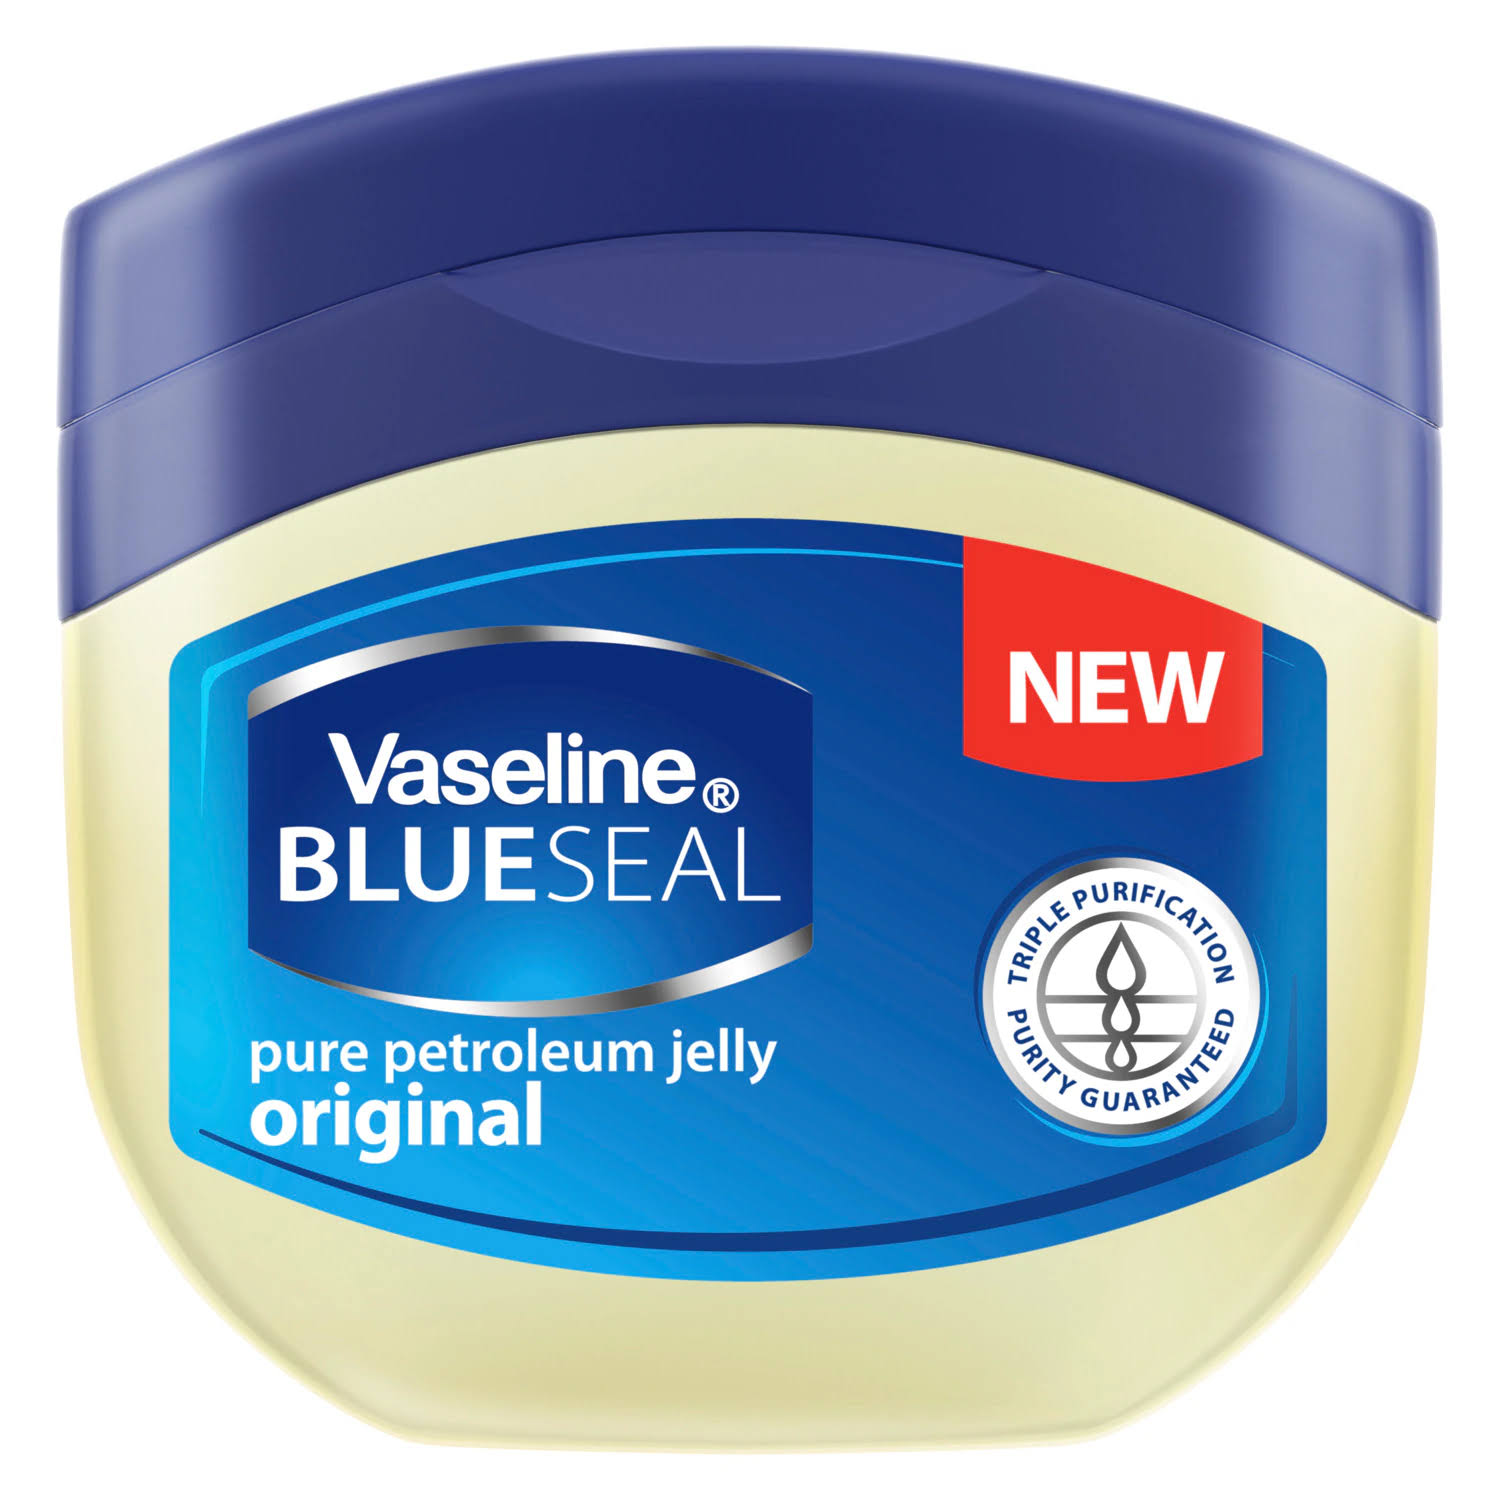 Vaseline Blueseal Pure Petroleum Jelly - Original, 100ml